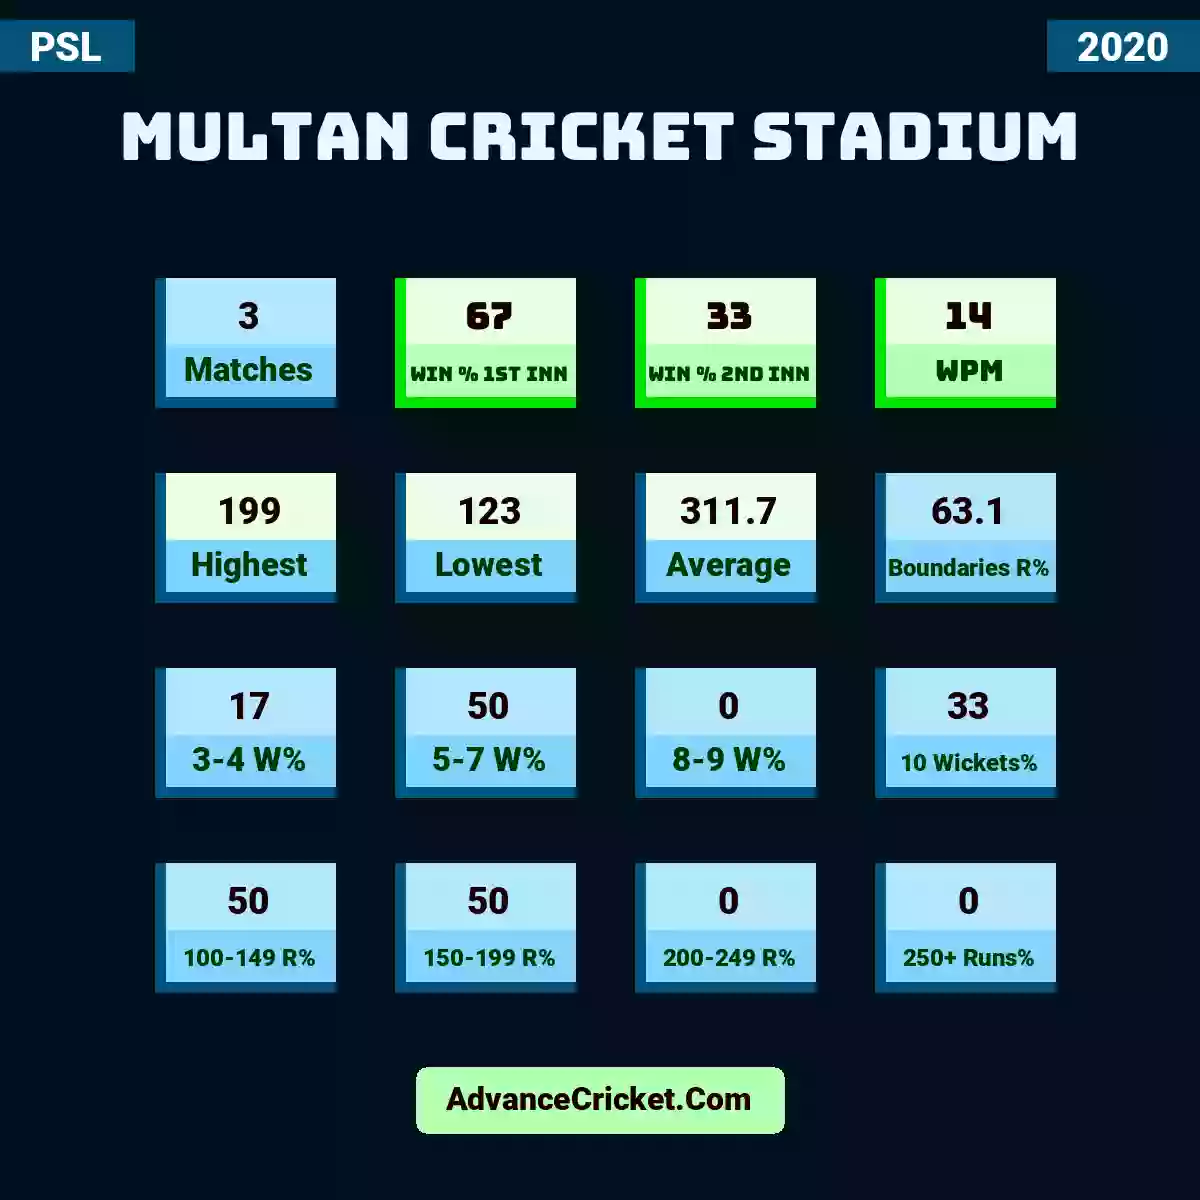 Image showing Multan Cricket Stadium with Matches: 3, Win % 1st Inn: 67, Win % 2nd Inn: 33, WPM: 14, Highest: 199, Lowest: 123, Average: 311.7, Boundaries R%: 63.1, 3-4 W%: 17, 5-7 W%: 50, 8-9 W%: 0, 10 Wickets%: 33, 100-149 R%: 50, 150-199 R%: 50, 200-249 R%: 0, 250+ Runs%: 0.